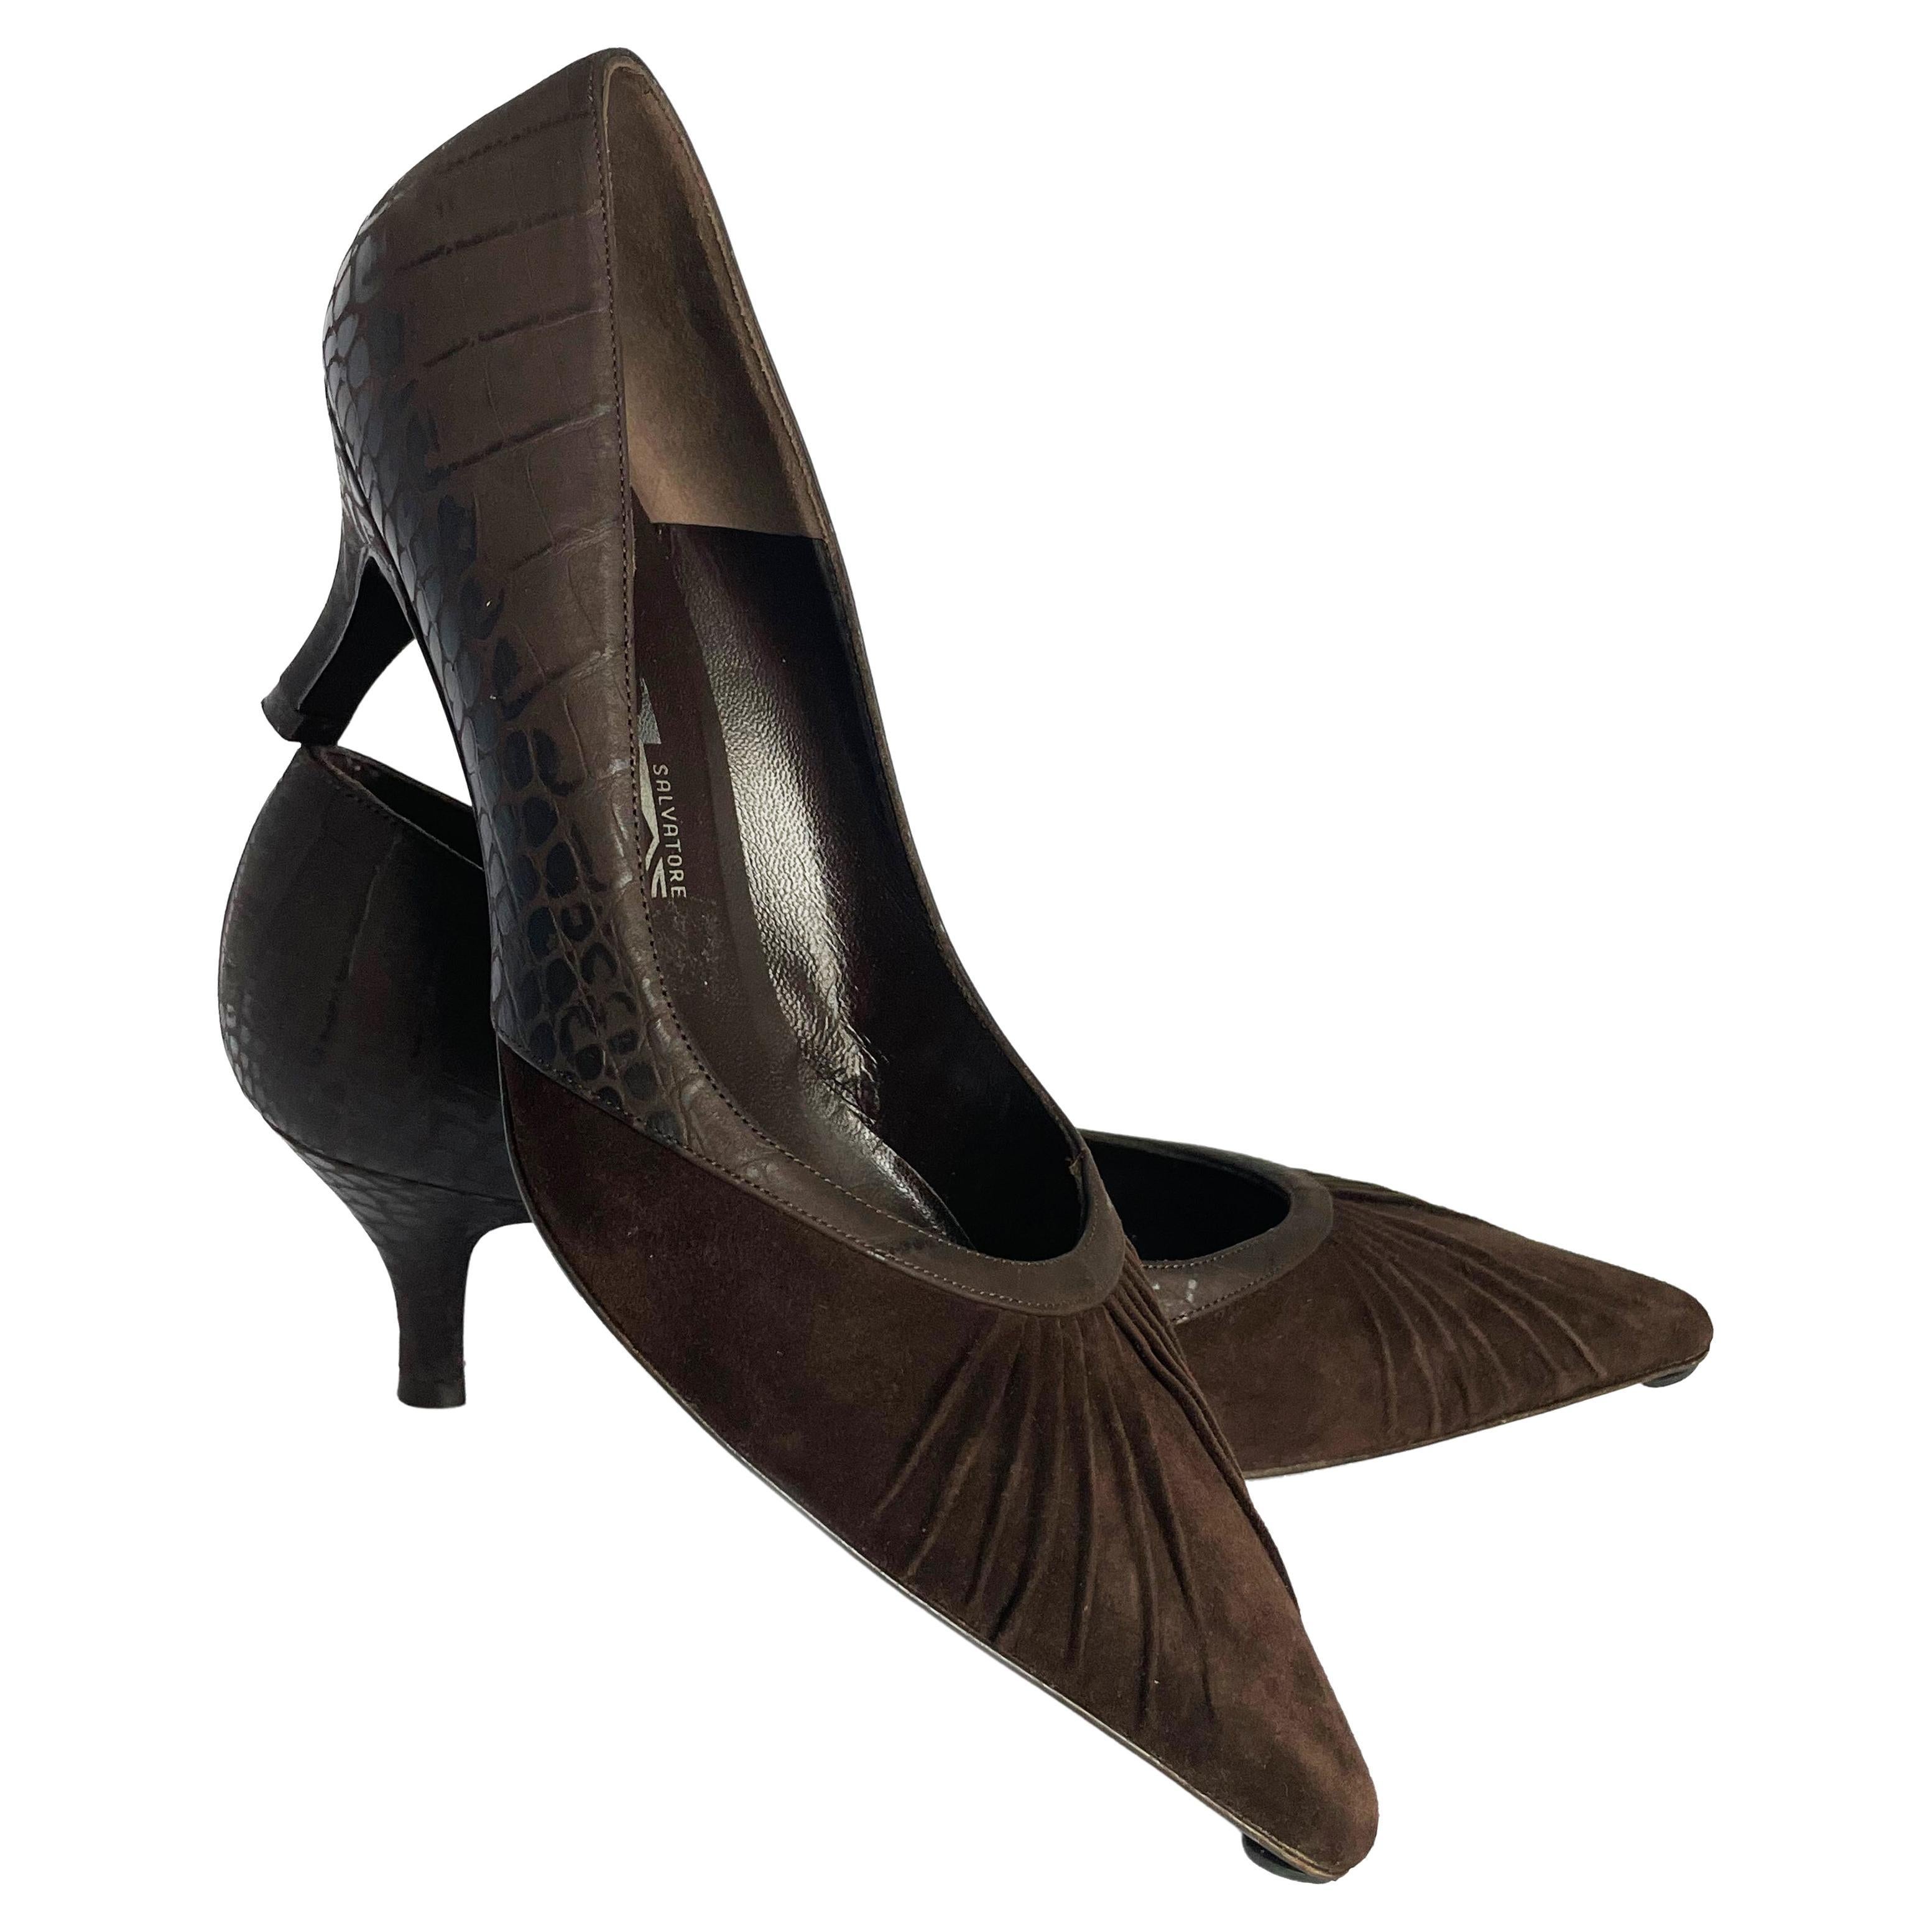 Vintage Salvatore Ferragamo Shoes - 7 For Sale on 1stDibs